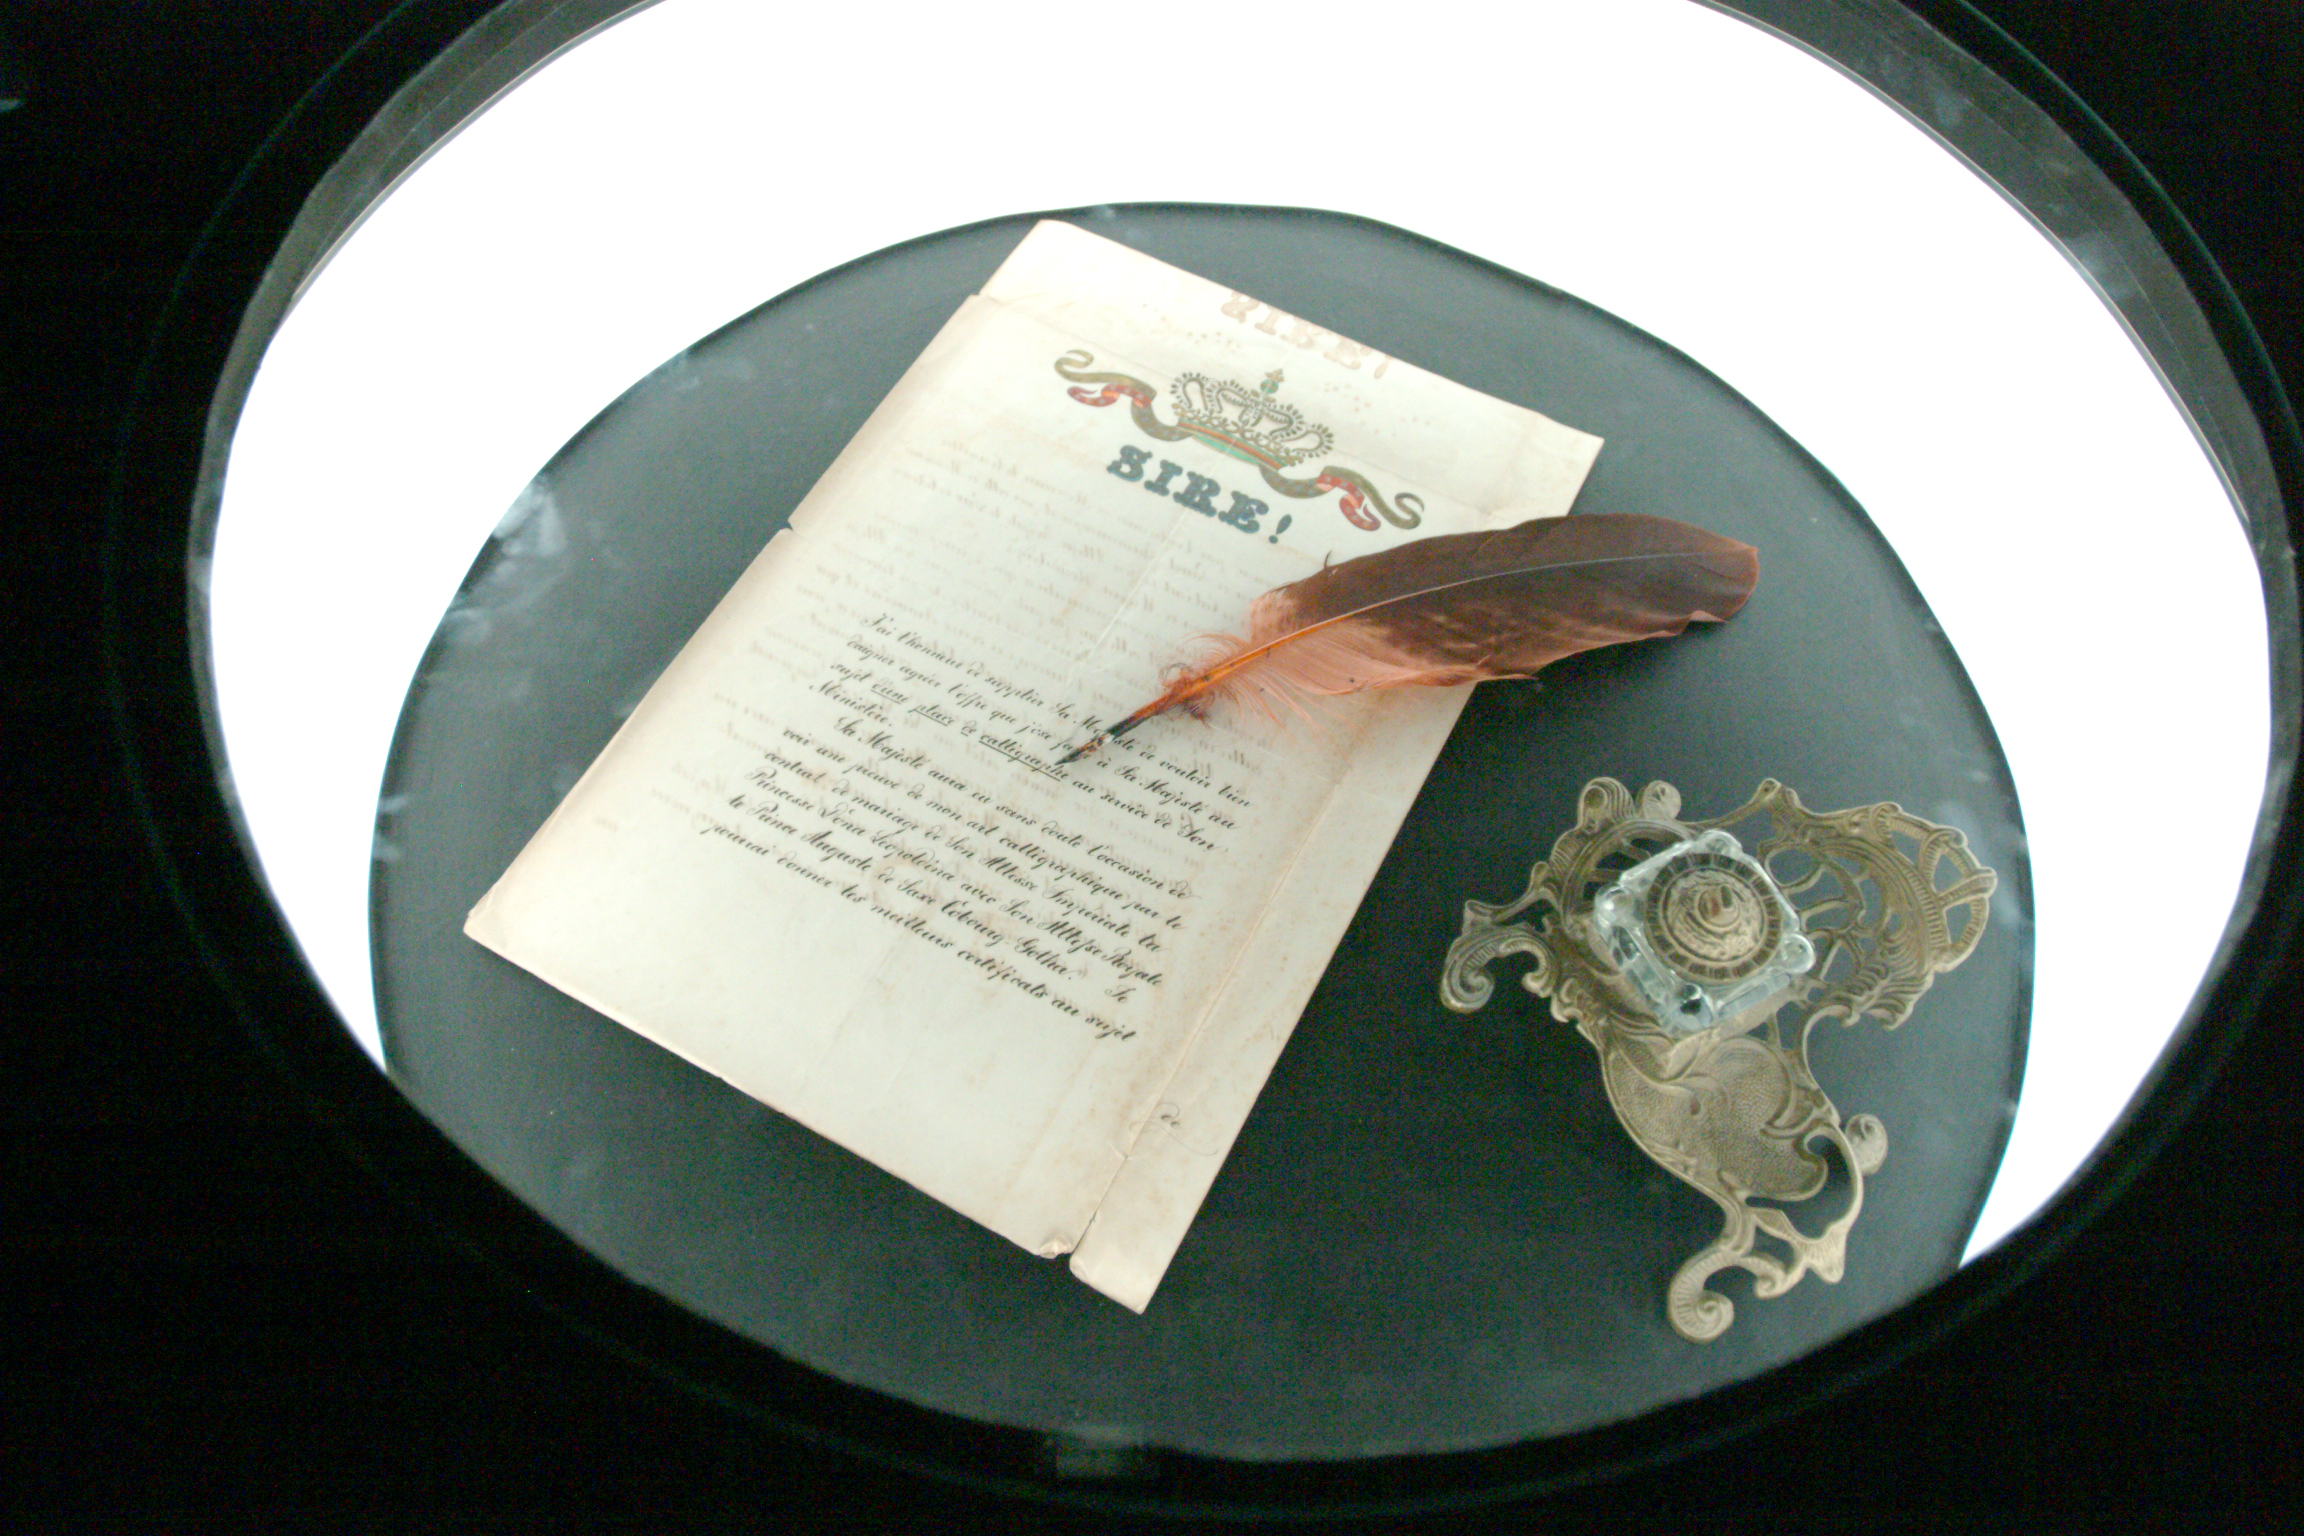 Carta de D.Pedro II escrita por calgrafo<a style='float:right;color:#ccc' href='https://www3.al.sp.gov.br/repositorio/noticia/hist/Carta caligrafo para DPedro II.jpg' target=_blank><i class='bi bi-zoom-in'></i> Clique para ver a imagem </a>